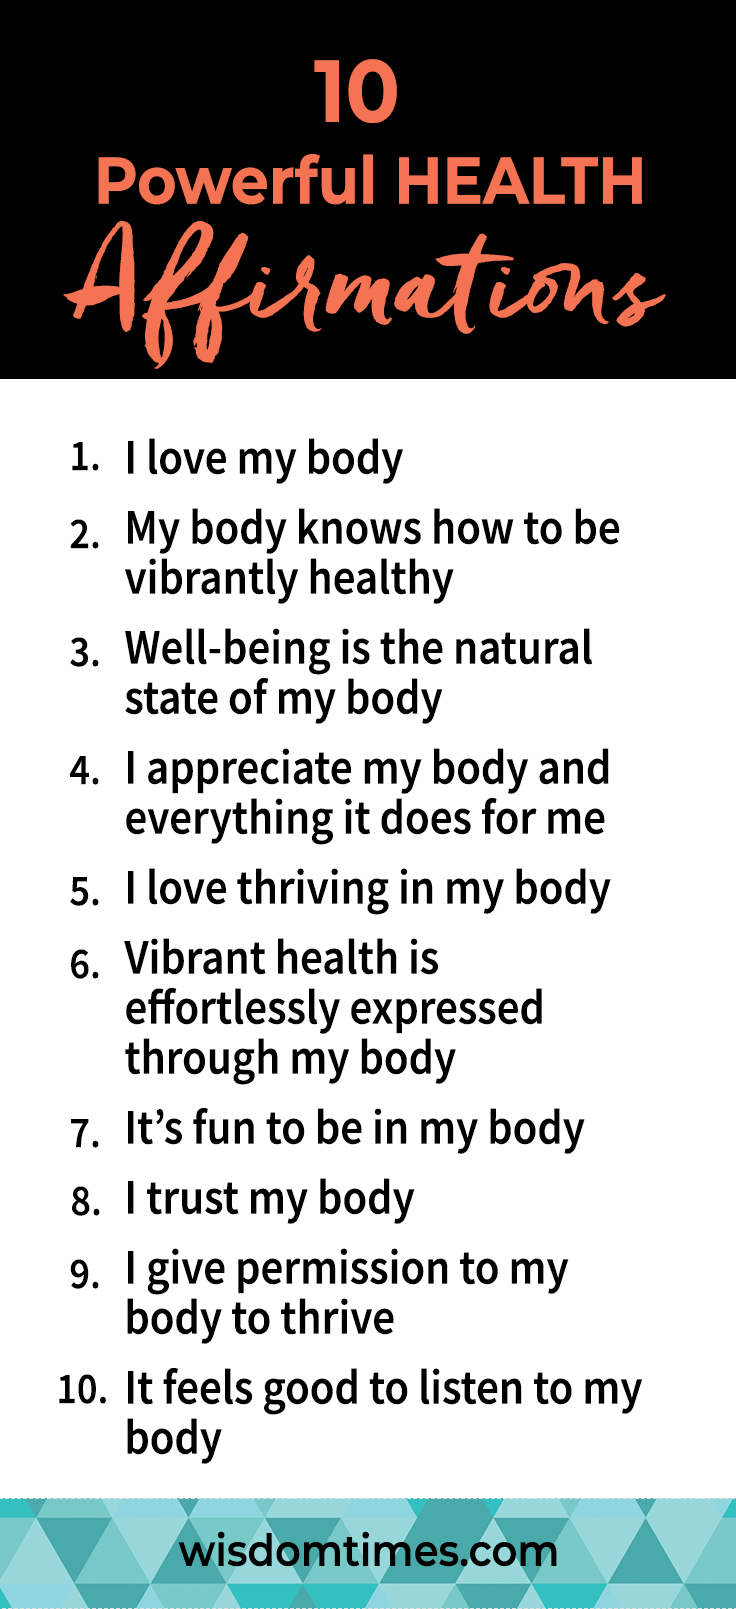 10 Powerful HEALTH Affirmations